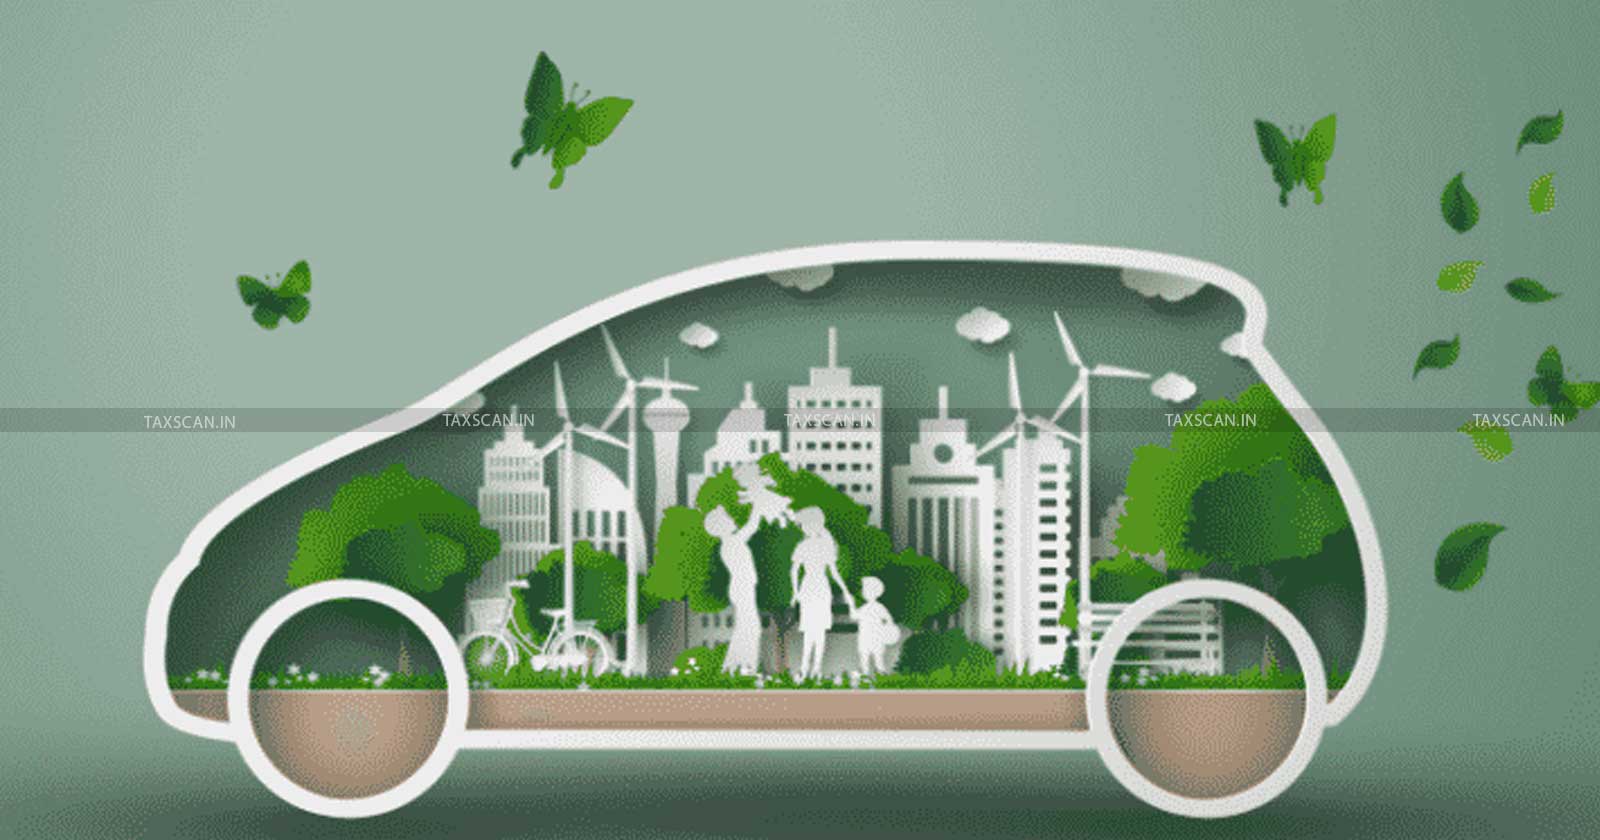 green tax - green world - analysis of green tax - sustainable future - steps towards green world - taxscan